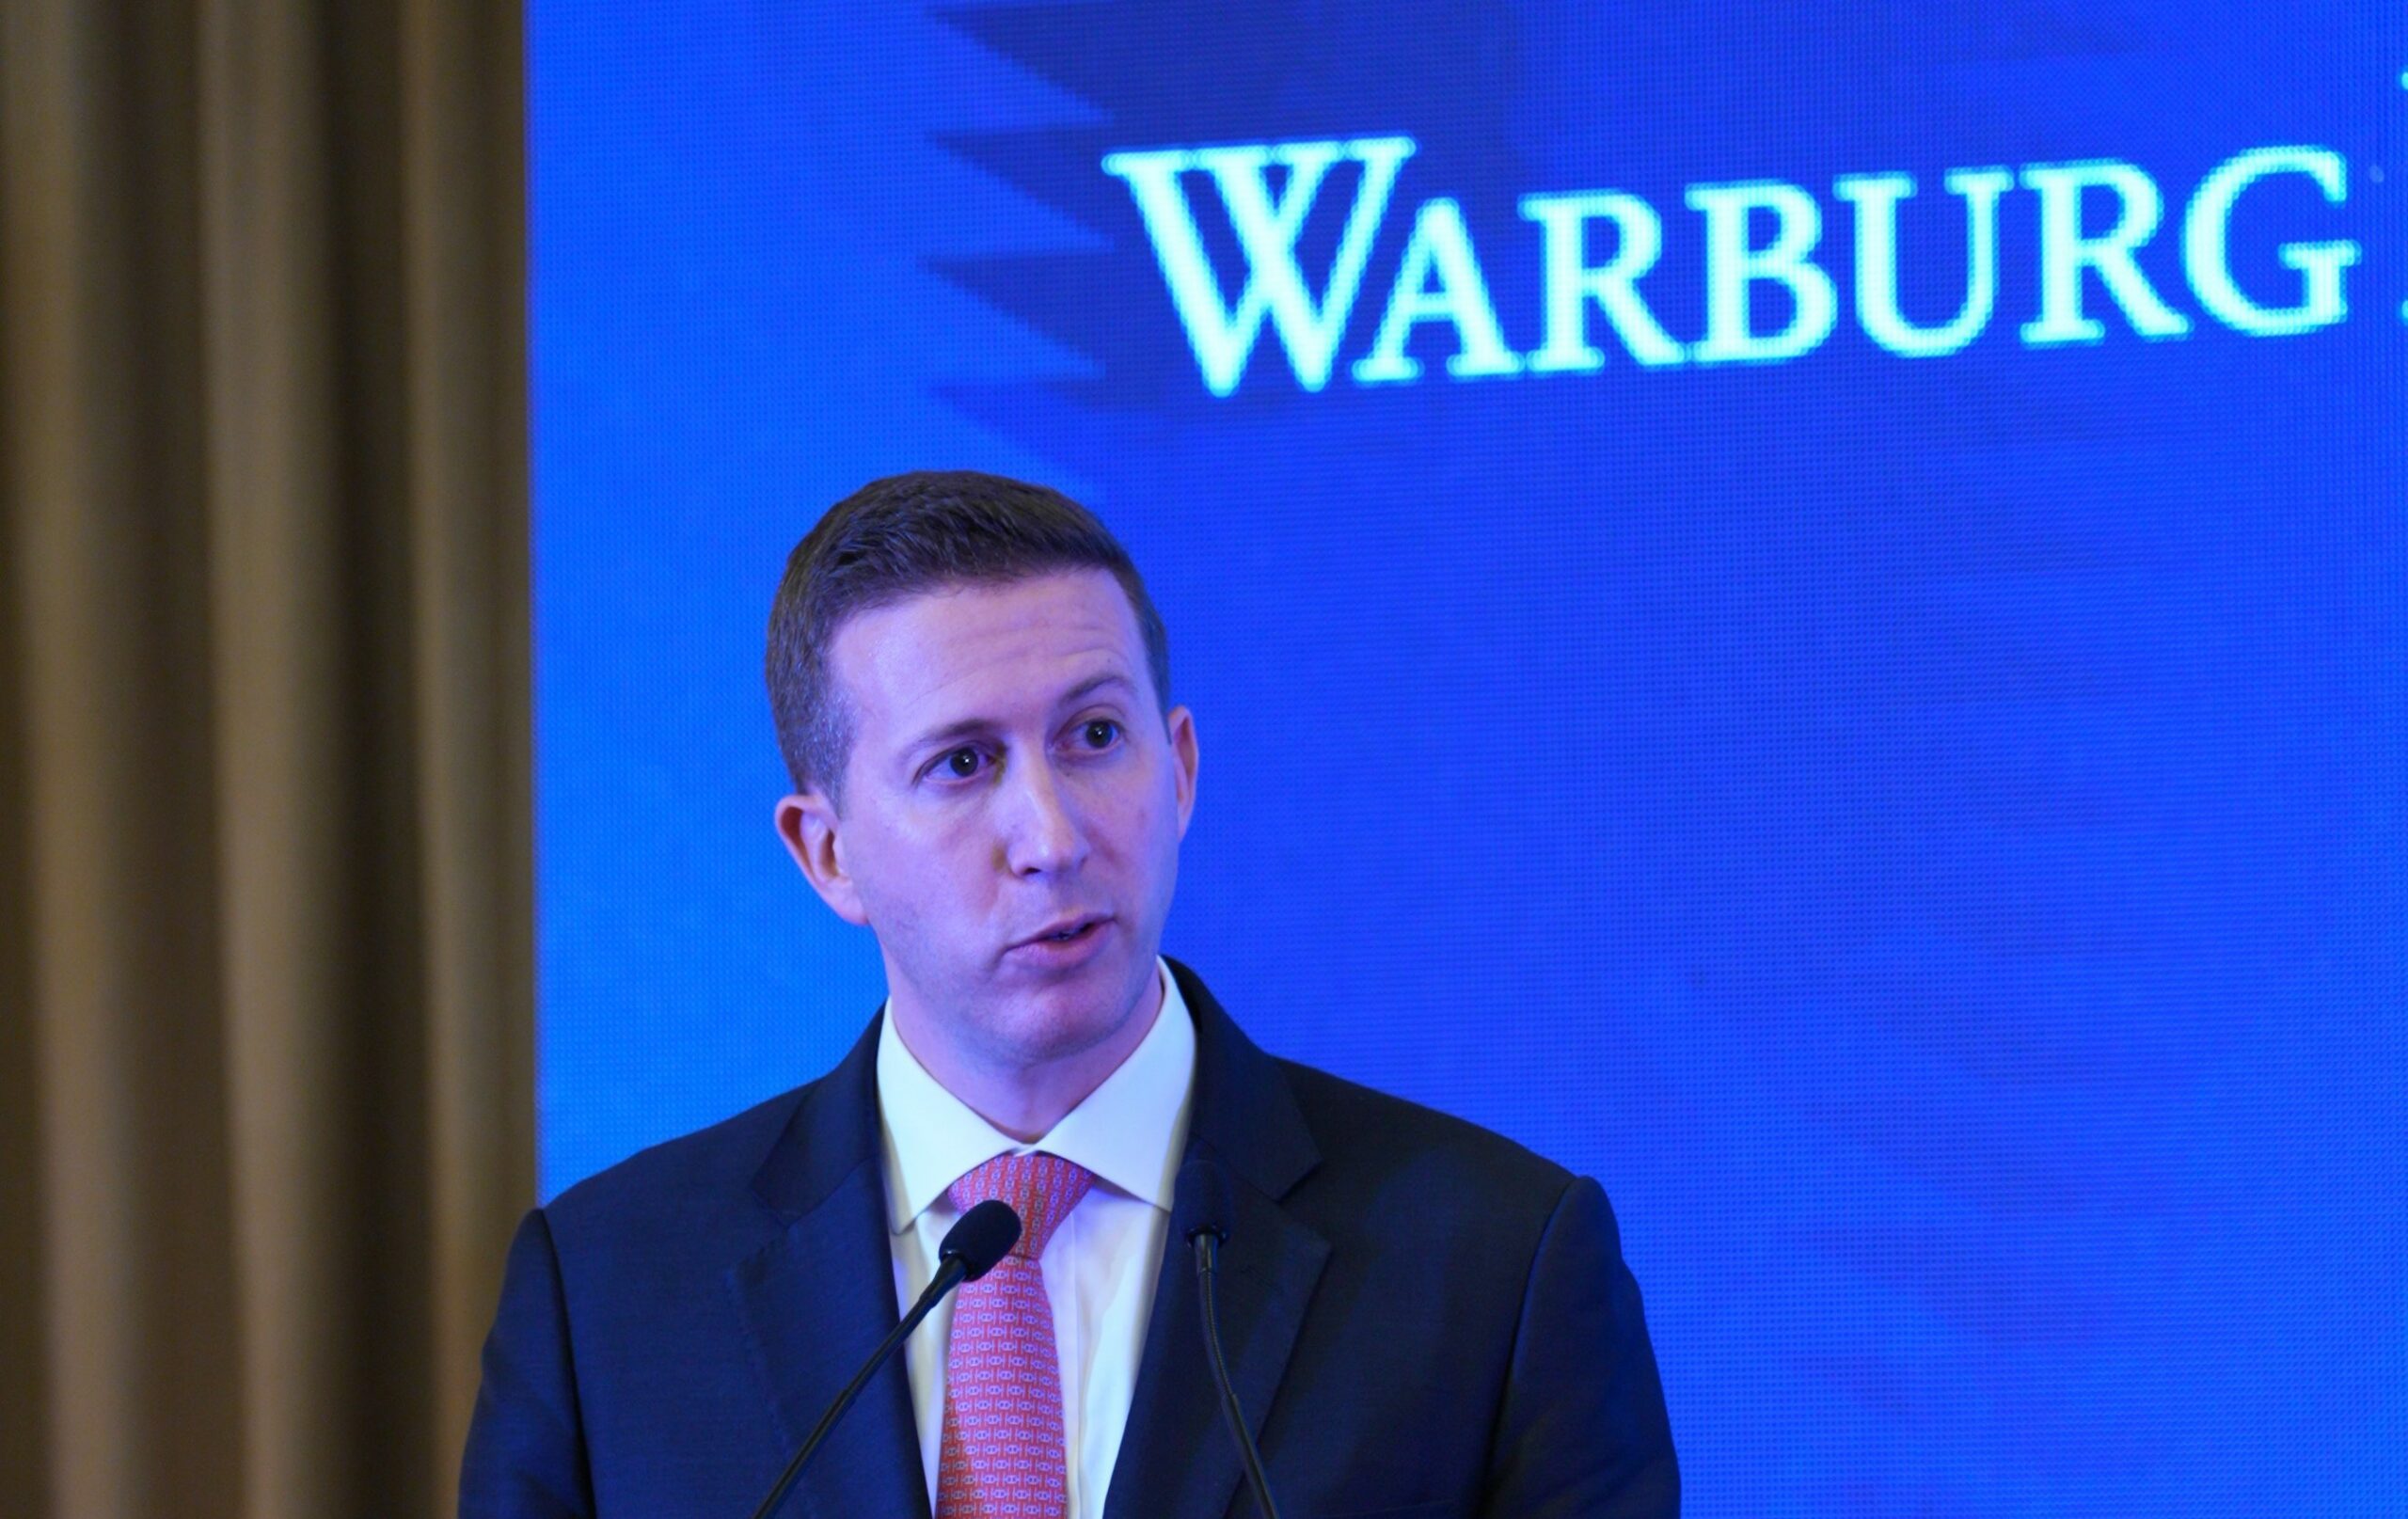 Warburg Pincus sees new opportunities in healthcare, education in Vietnam